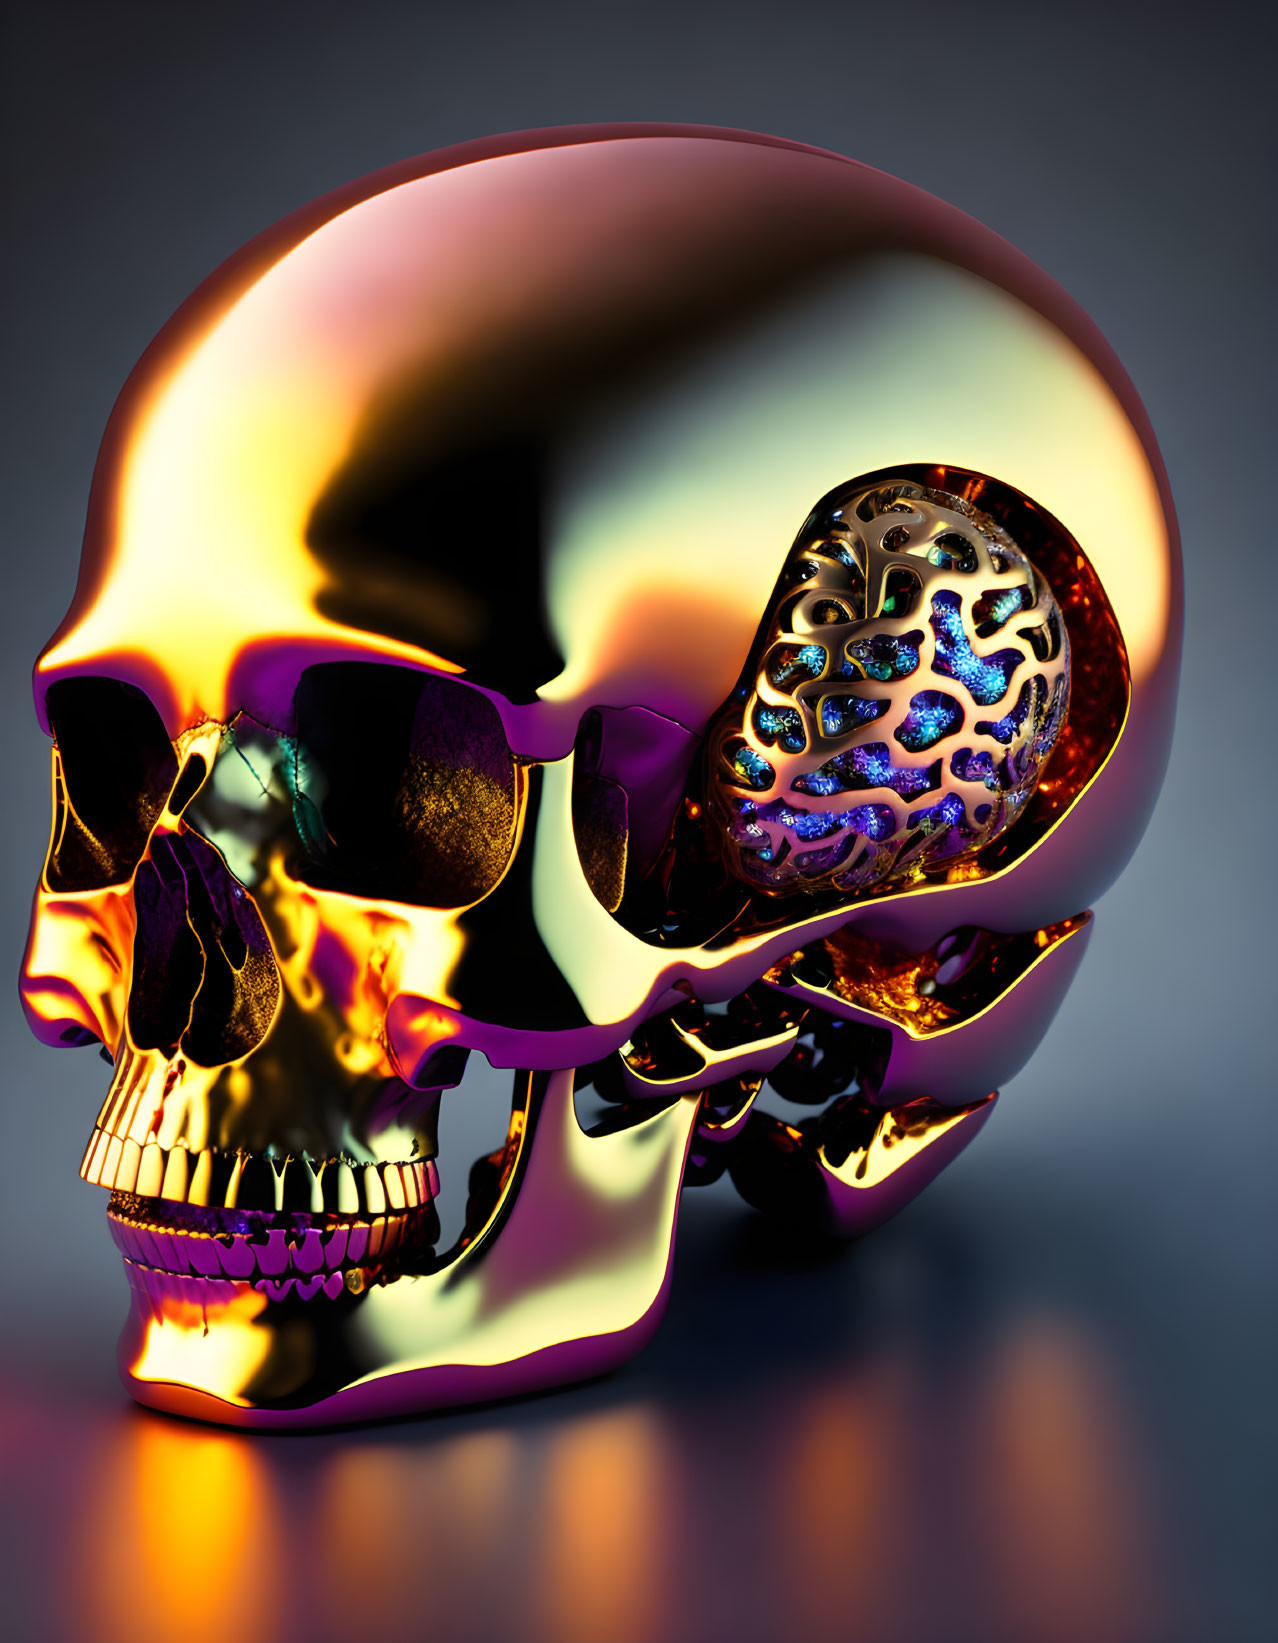 metallic skull with exposed brain